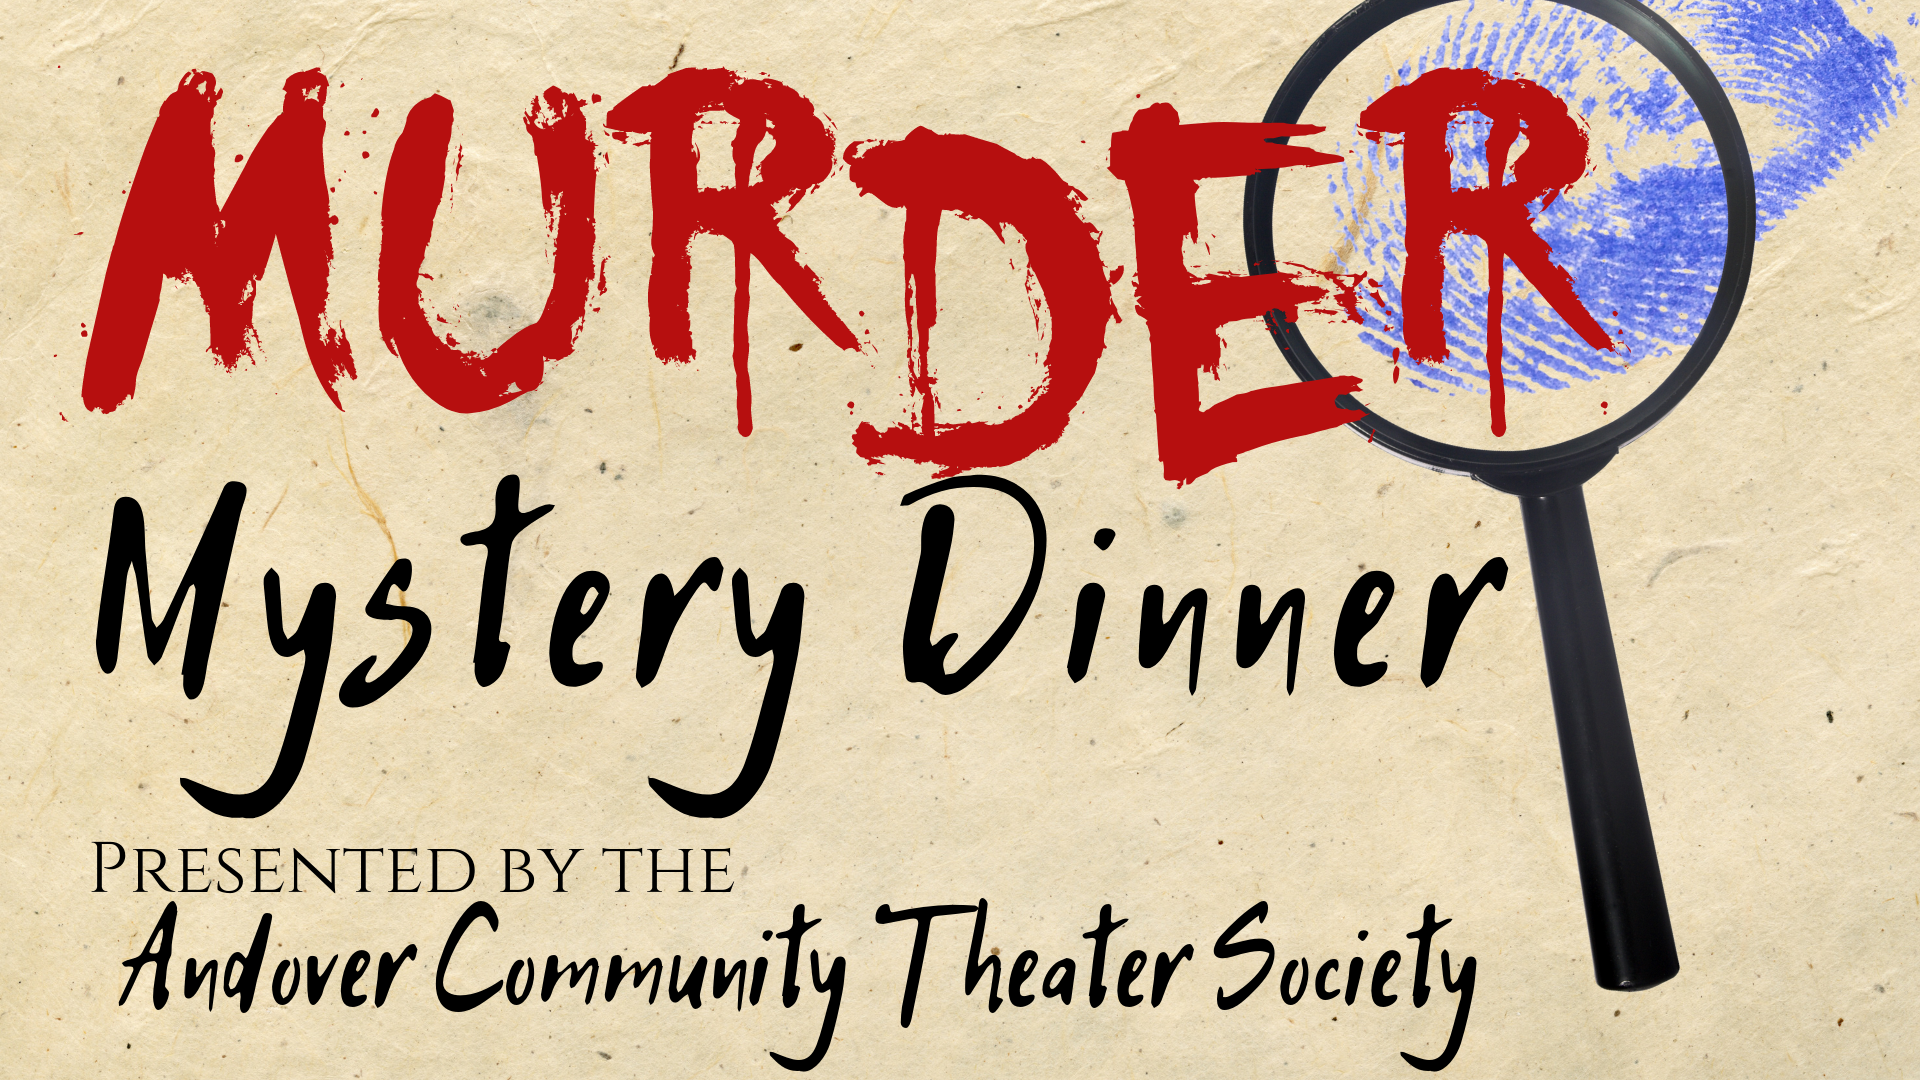 Murder Mystery Dinner Theater